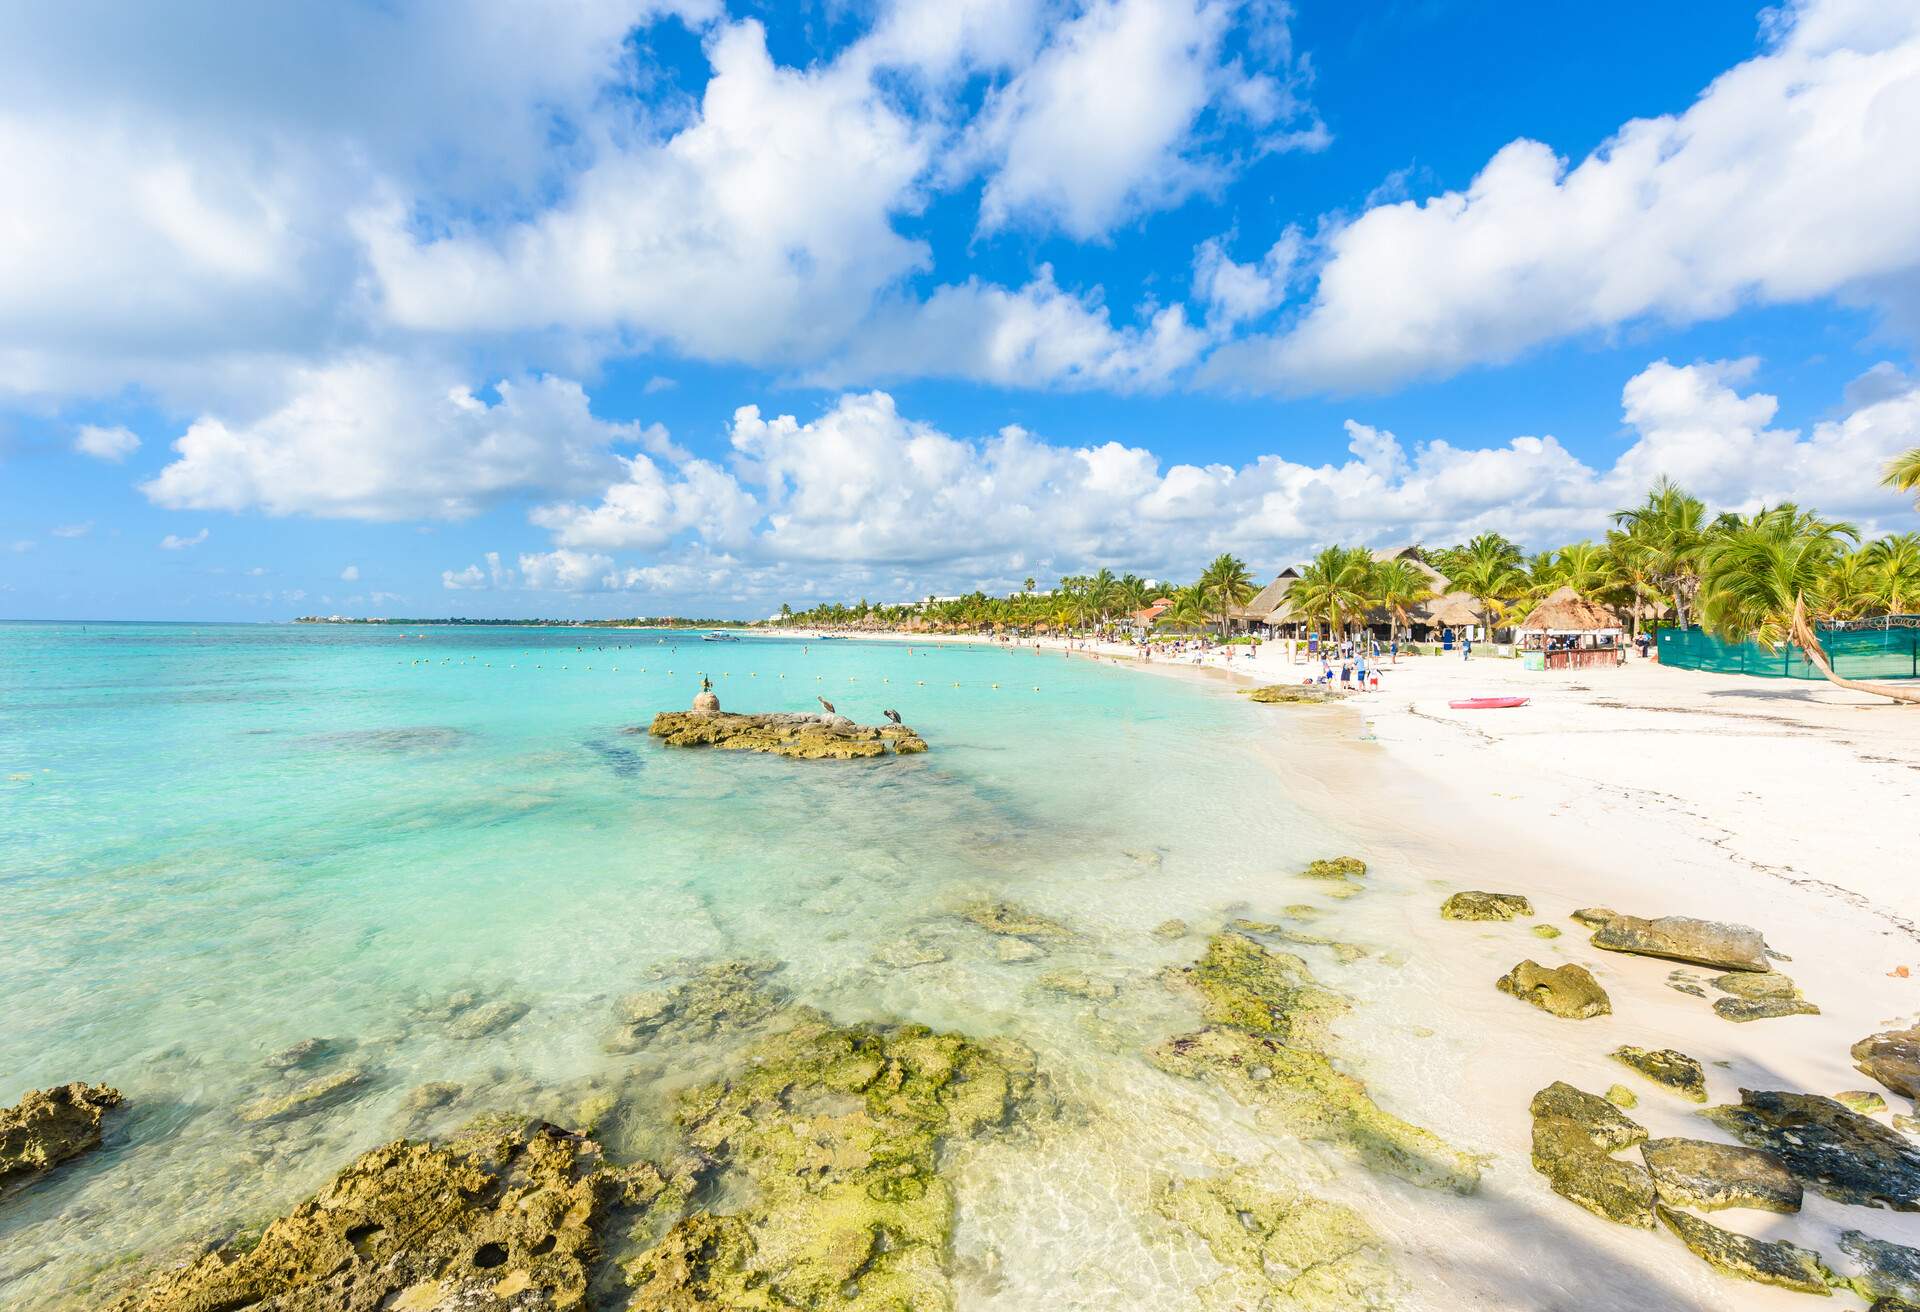 Riviera Maya - paradise beach Akumal at Cancun, Quintana Roo, Mexico - Caribbean coast